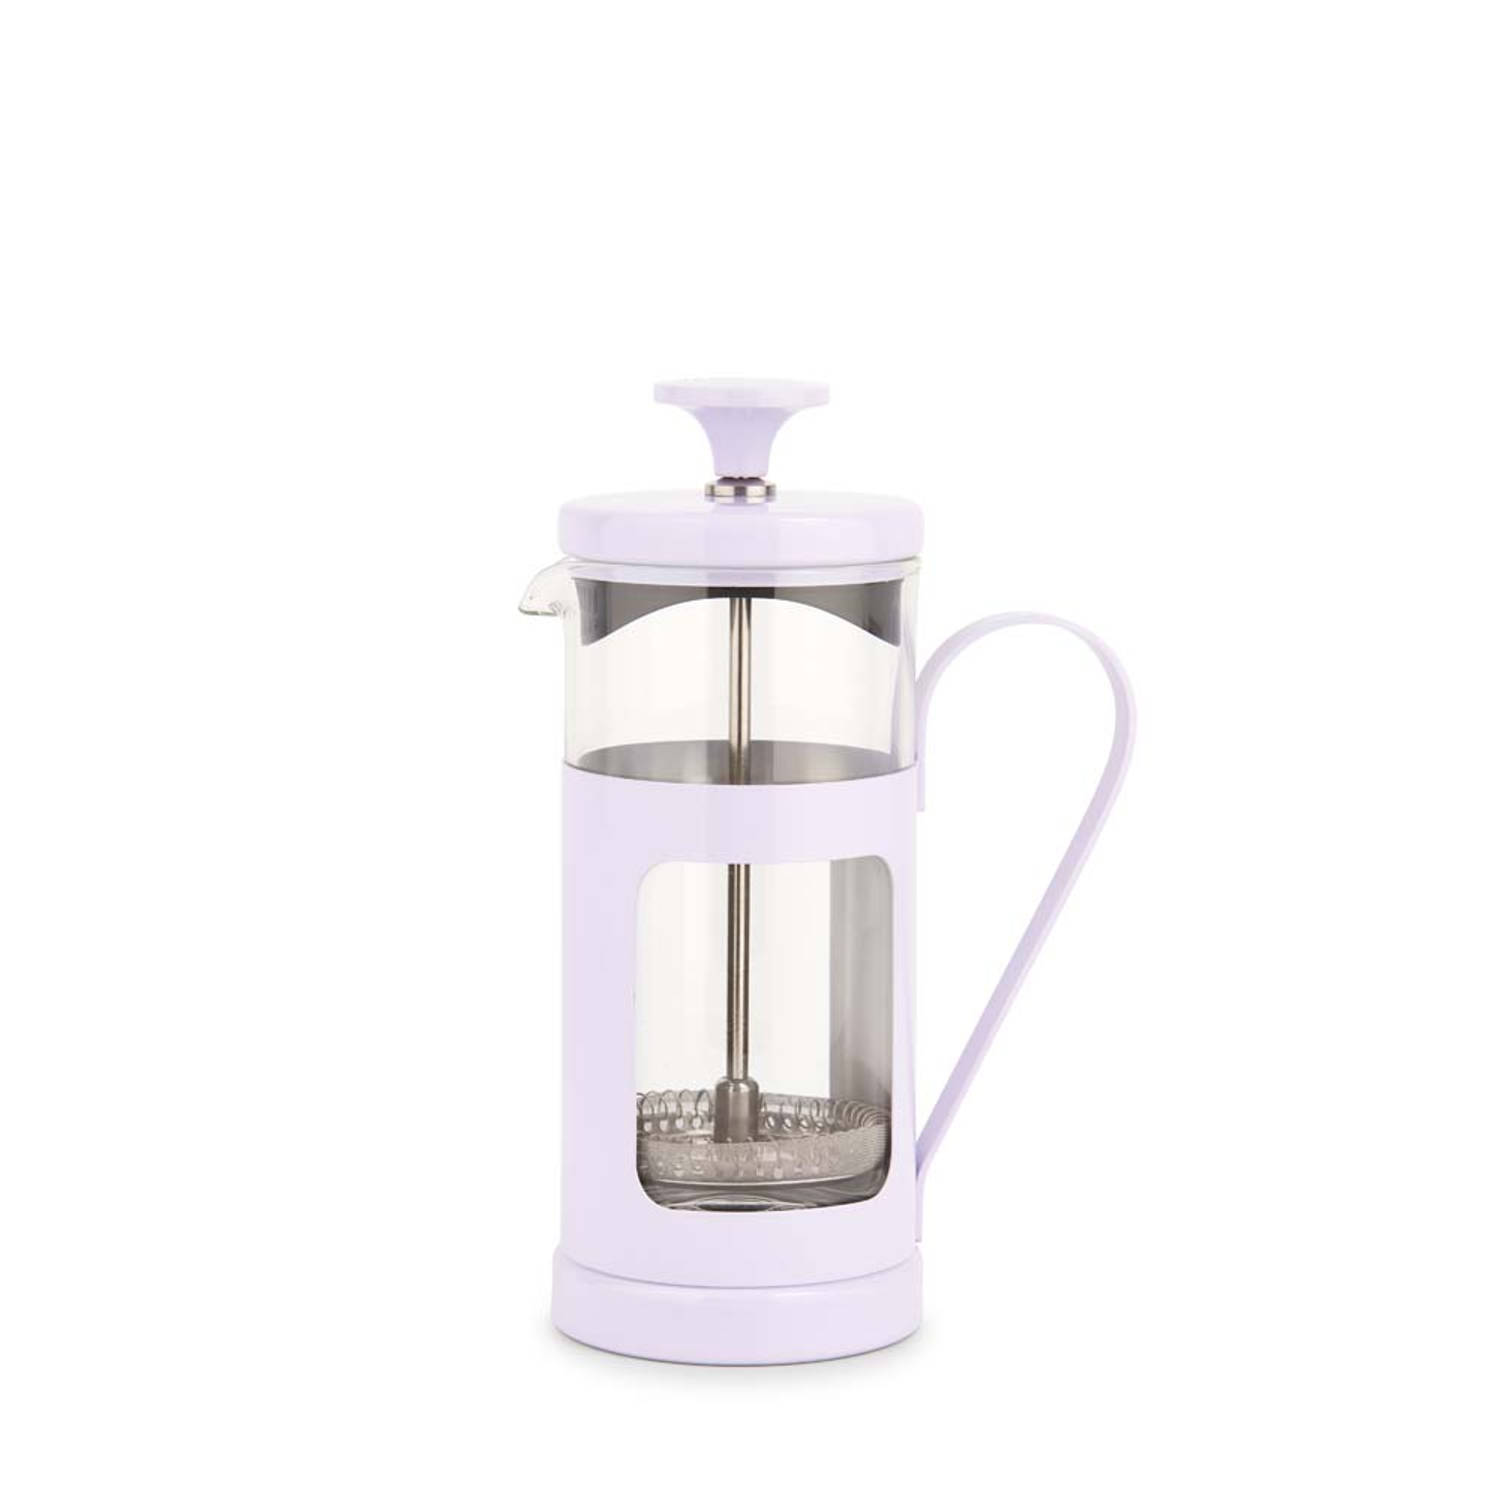 Cafetiere - 3 cups - 350ml - Lavendel - Voor Thee & Koffie - La Cafetiere | Monaco